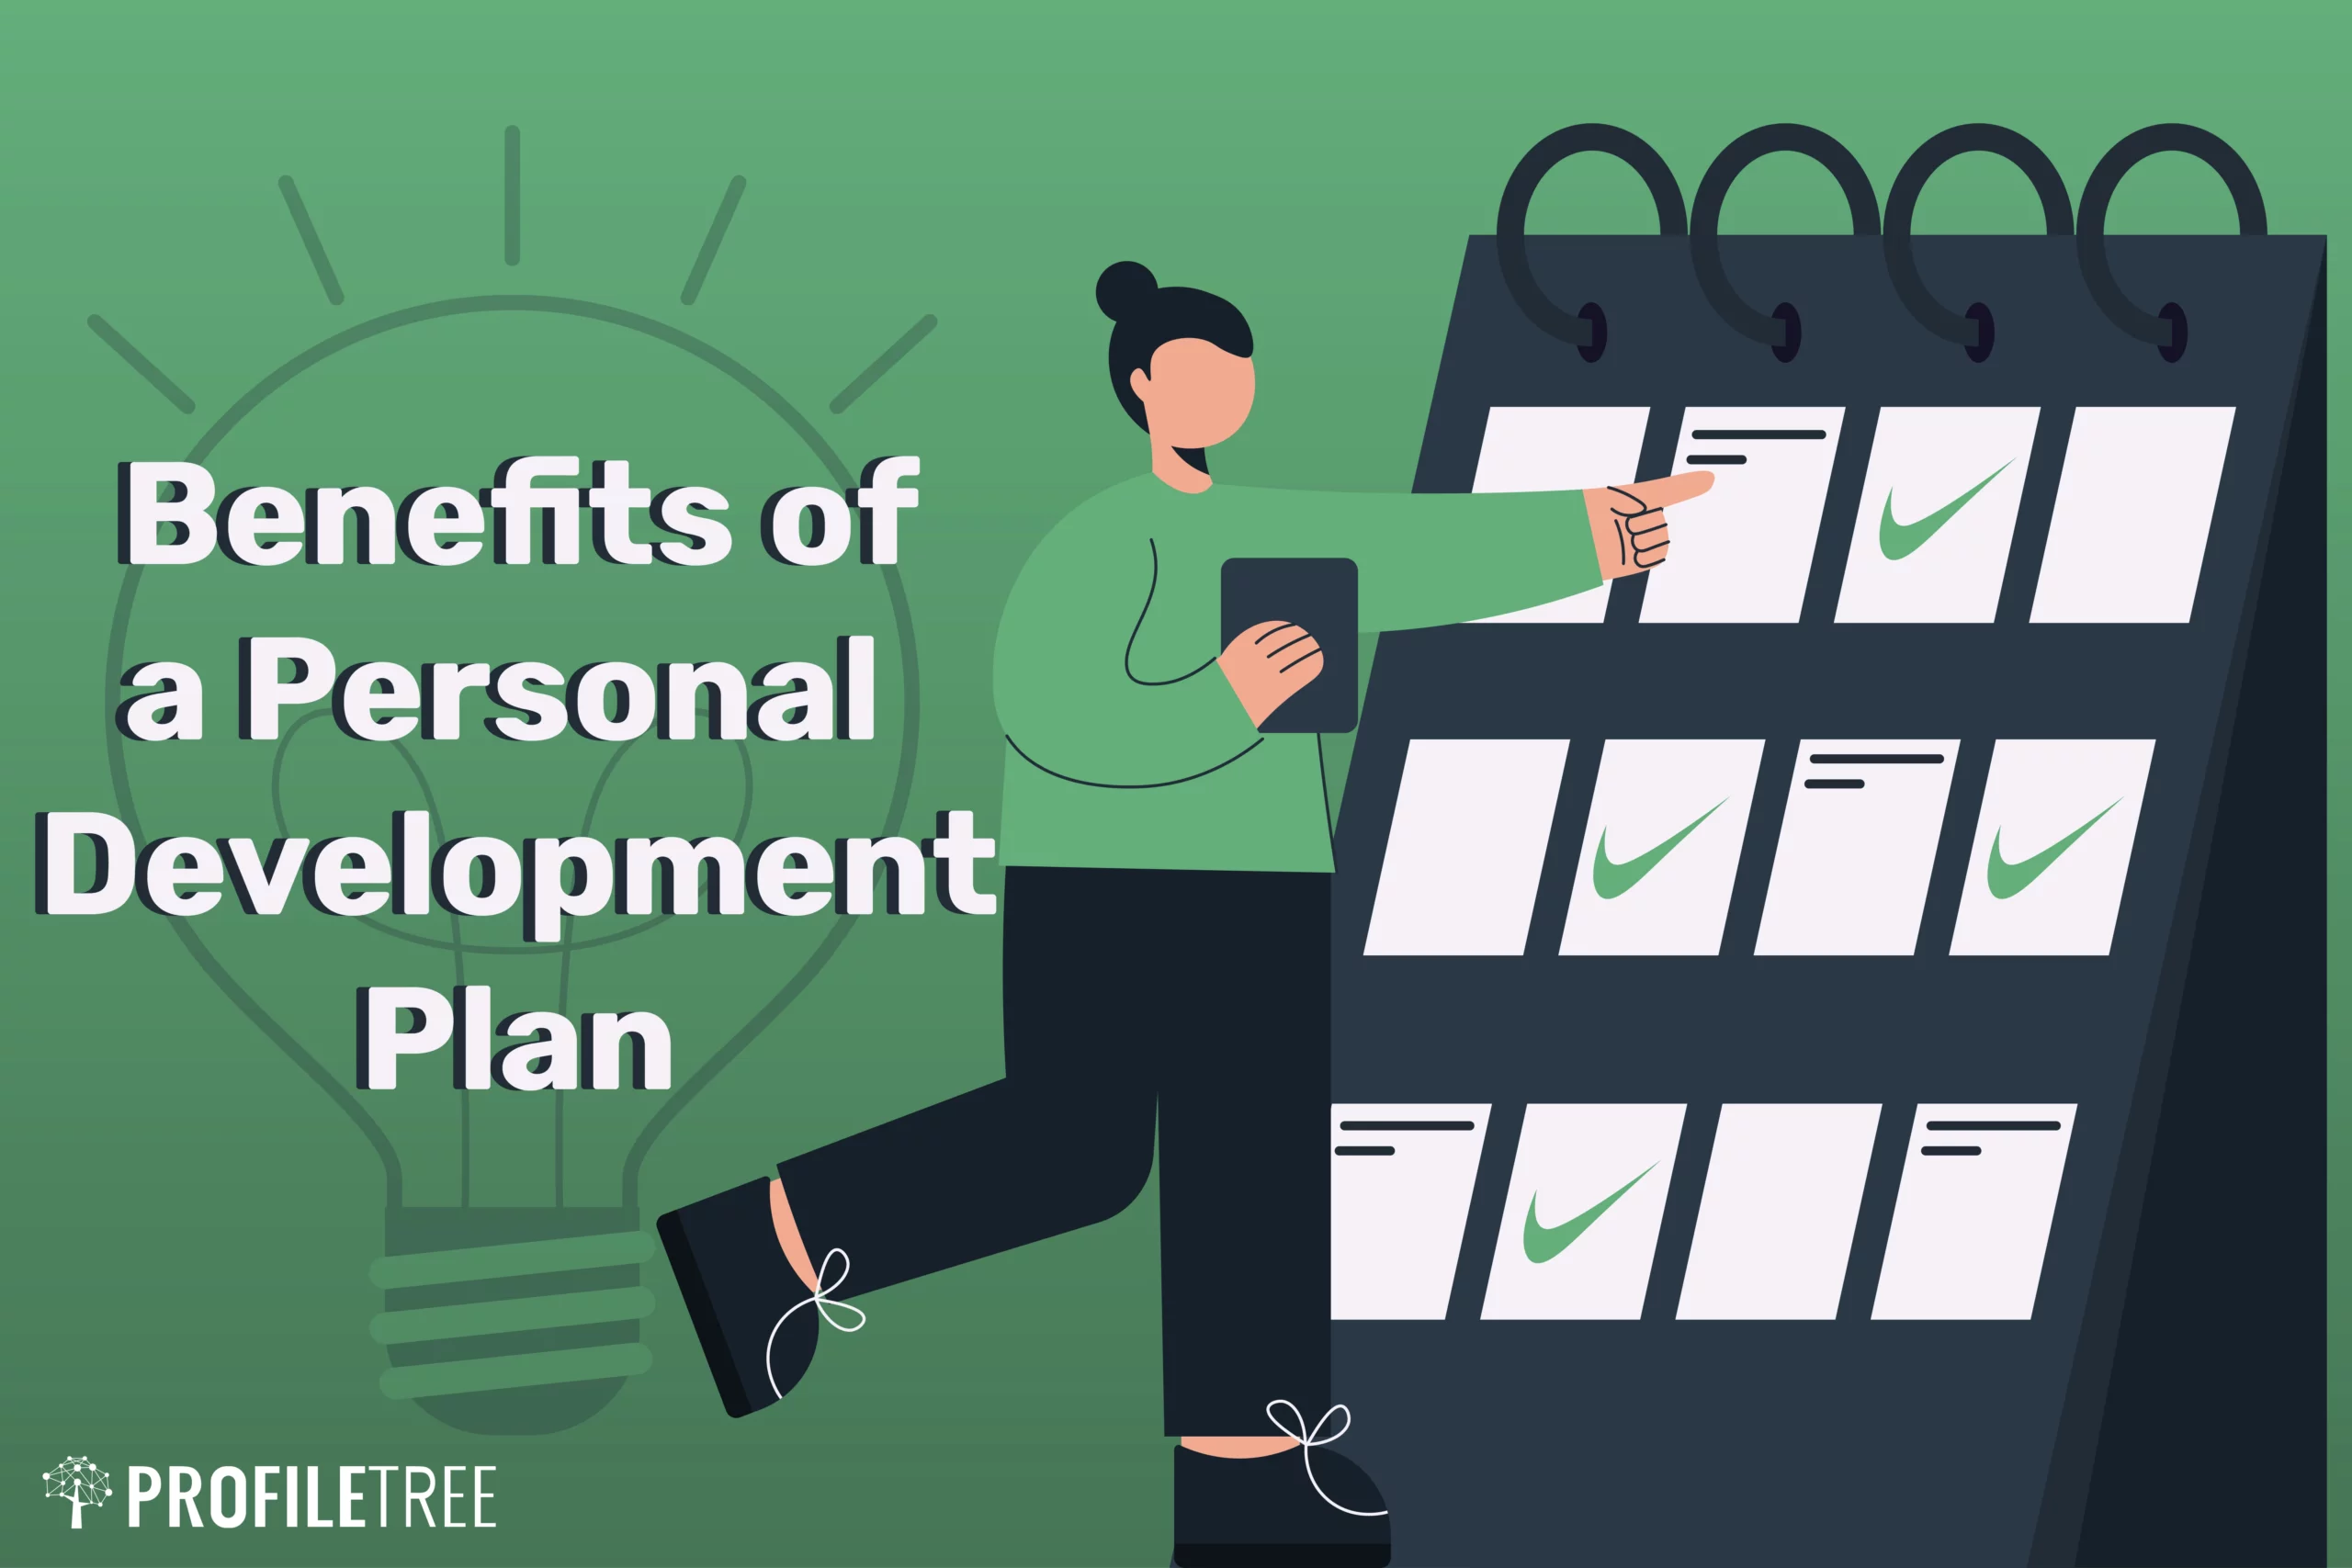 Benefits of a Personal Development Plan